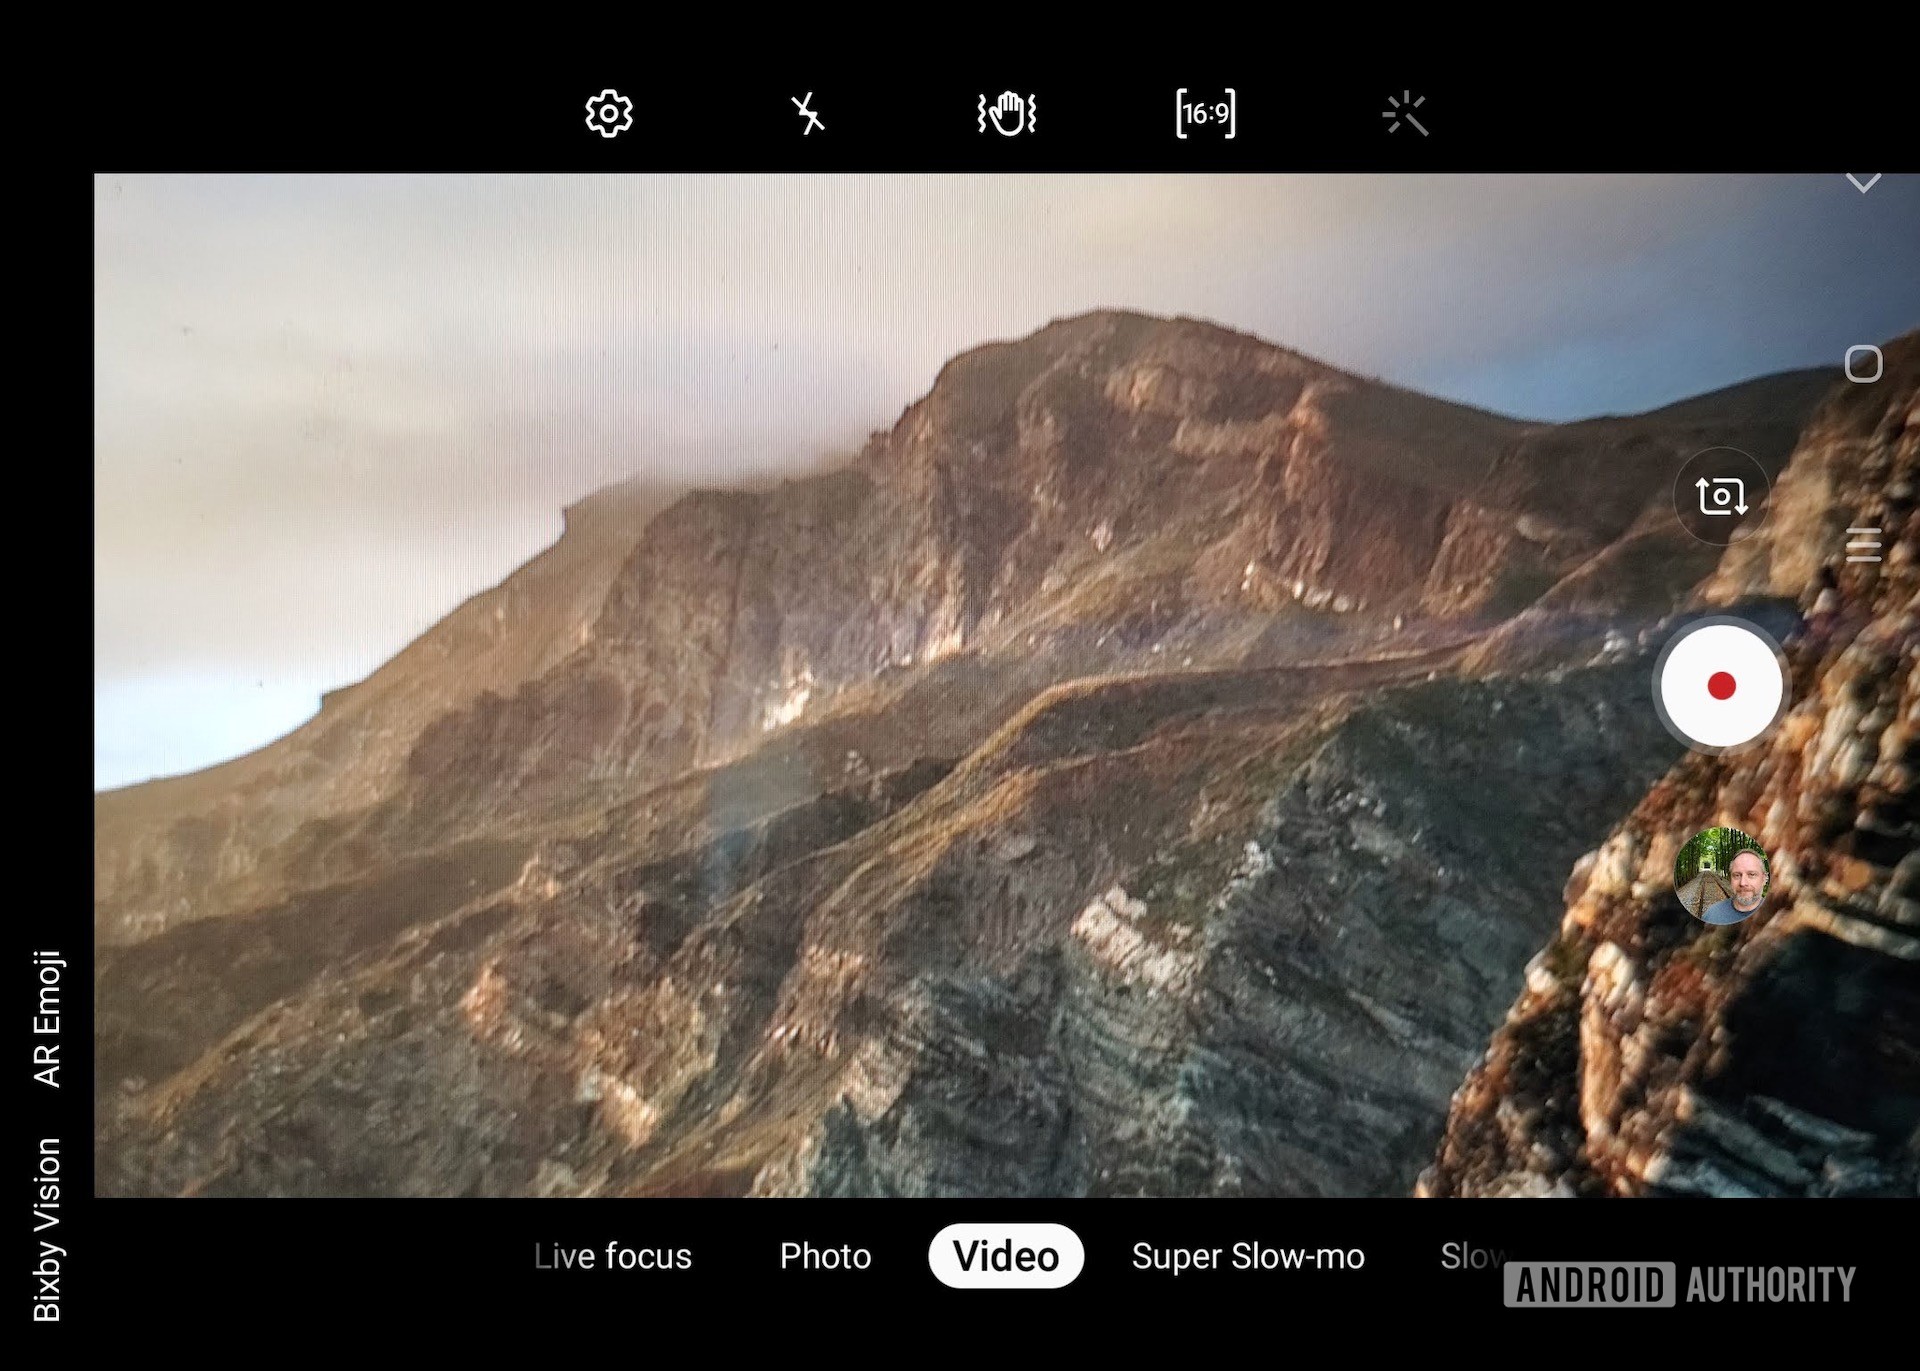 Samsung Galaxy Fold review camera app video